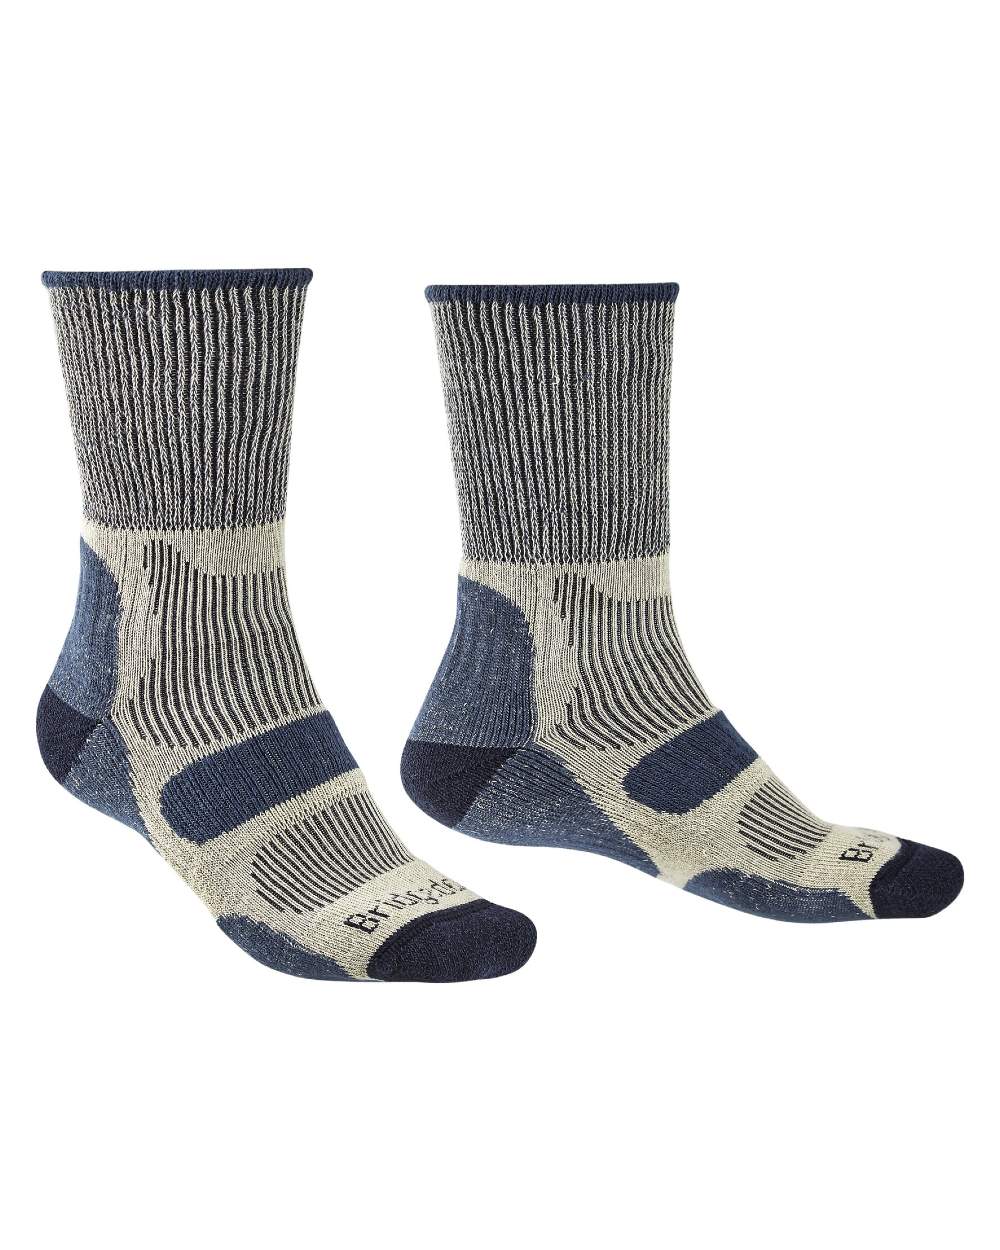 DANISH ENDURANCE Merino Wool Cushioned Hiking Socks 3-Pack for Men XL Gray  Color